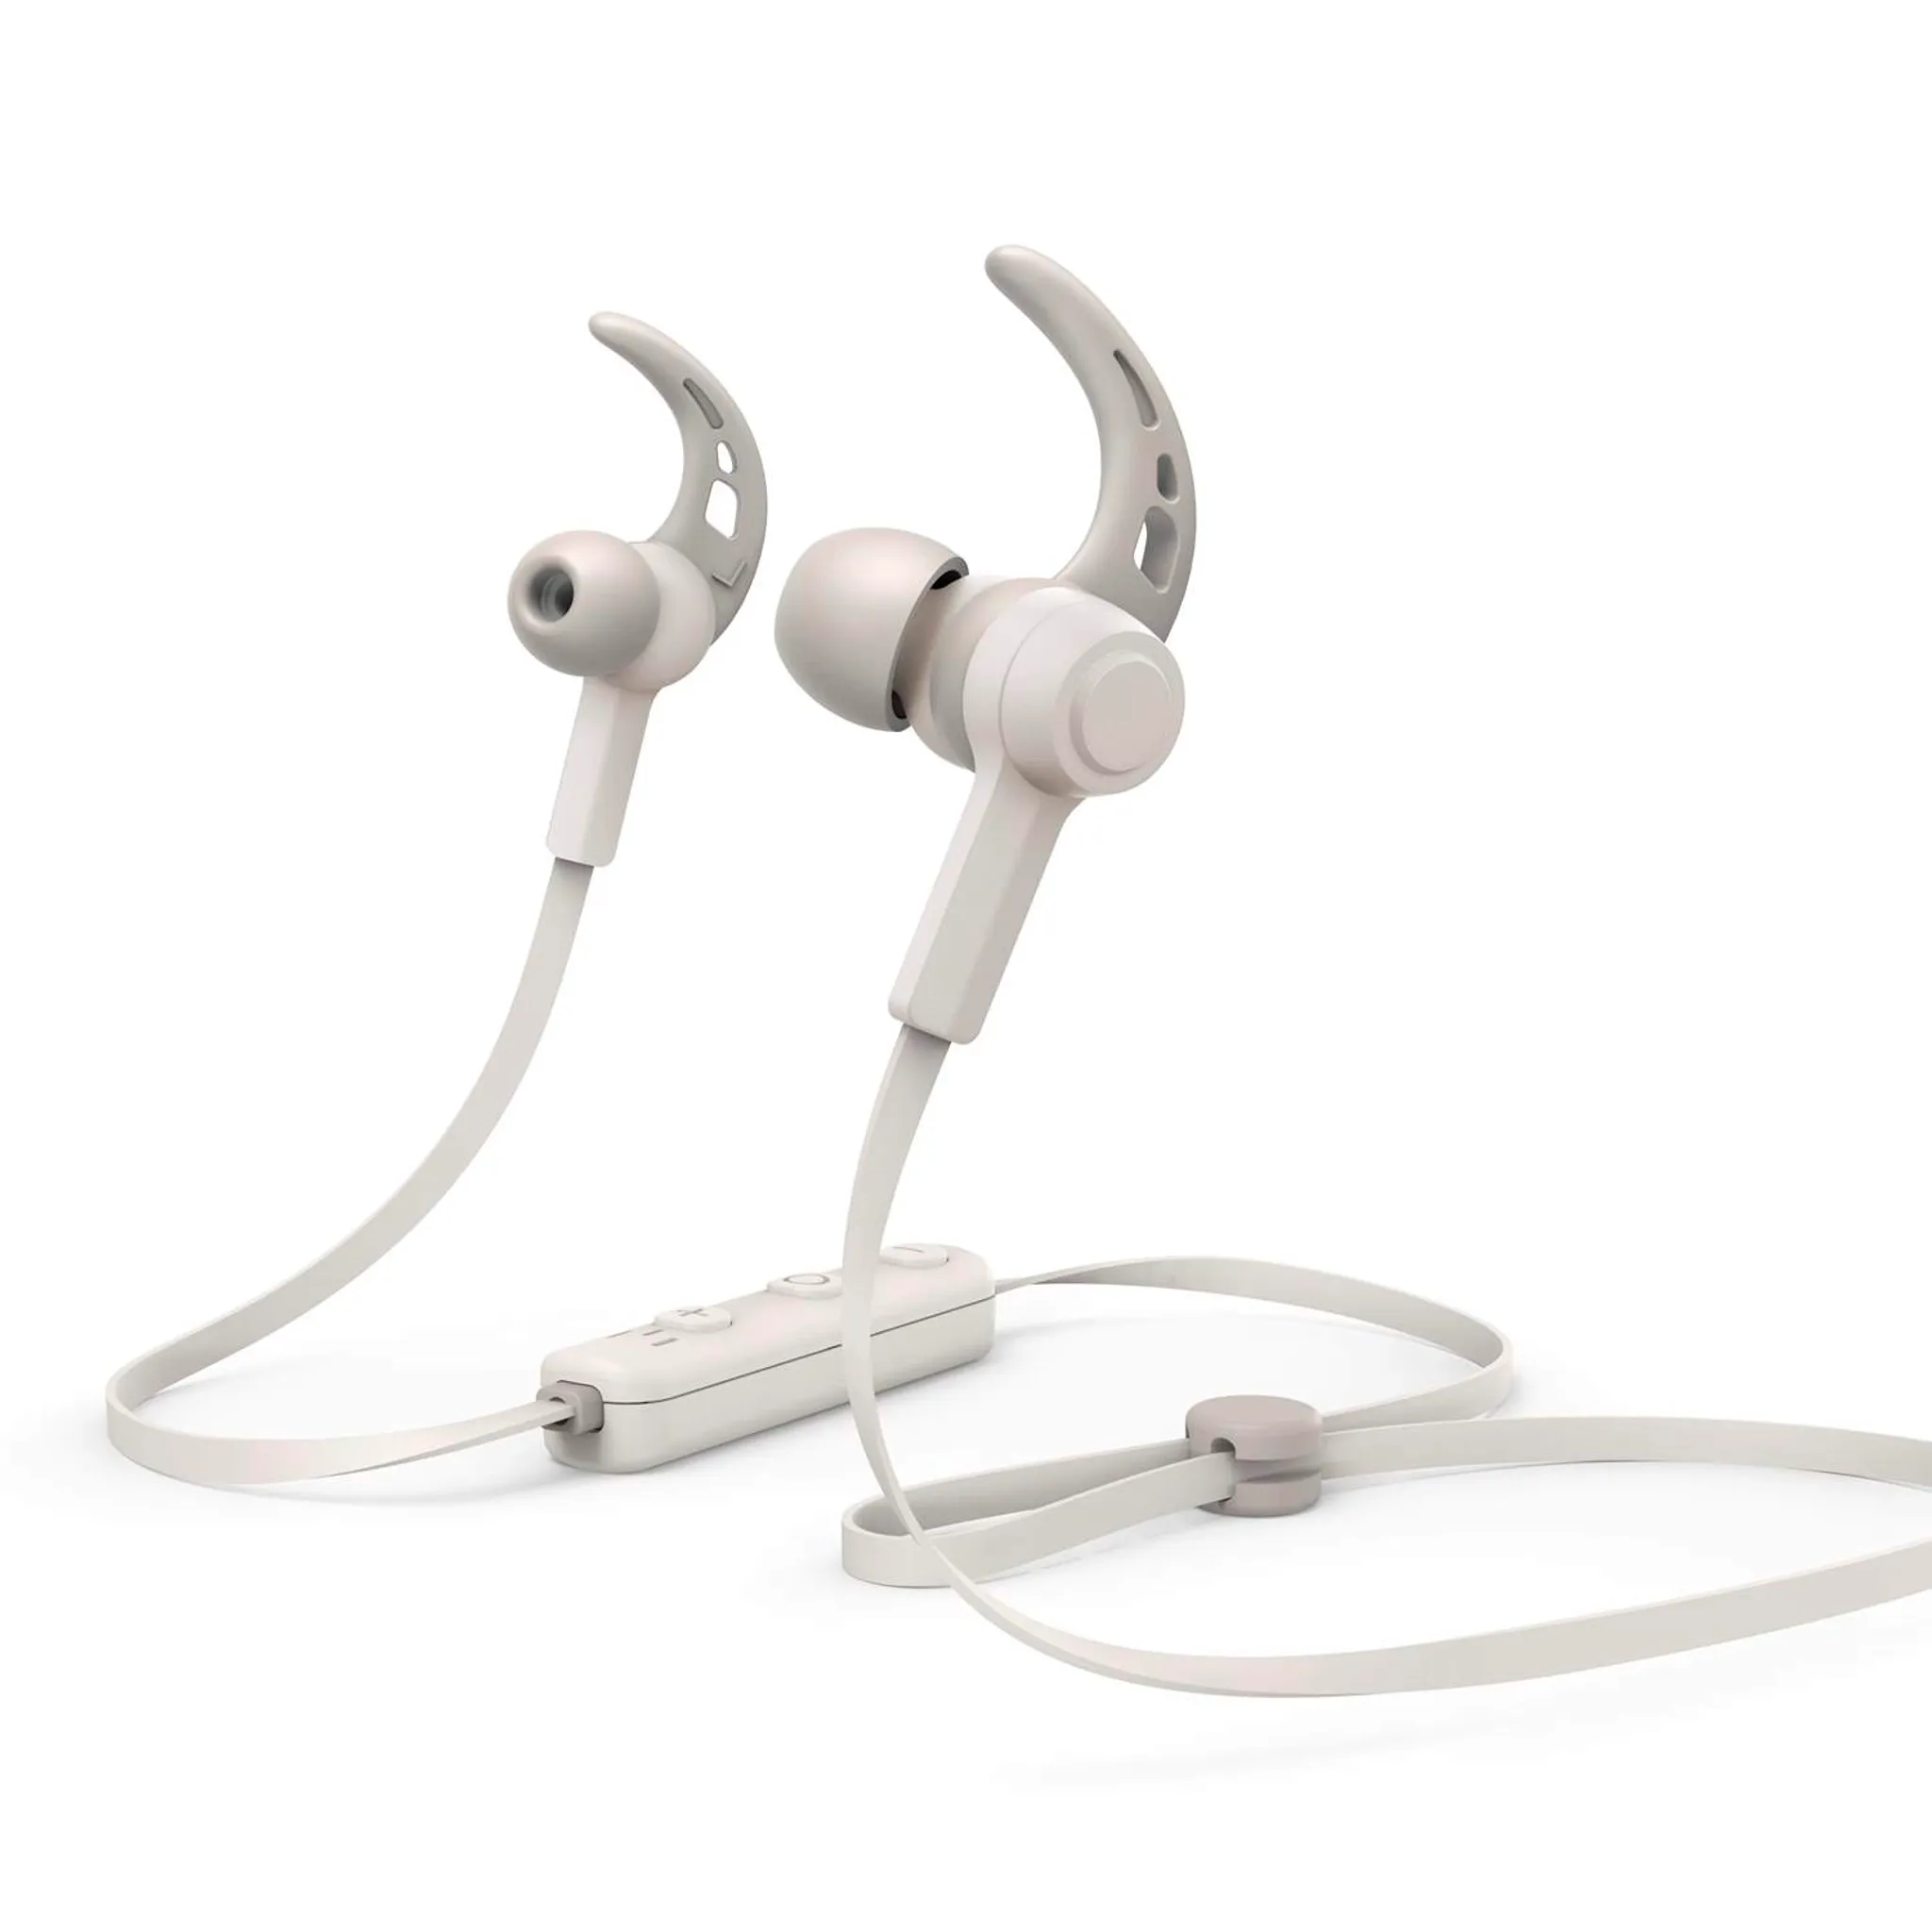 Hama Bluetooth®-In-Ear-Stereo-Headset Connect silver birch/warm grey  Mikrofon | PC-Headsets